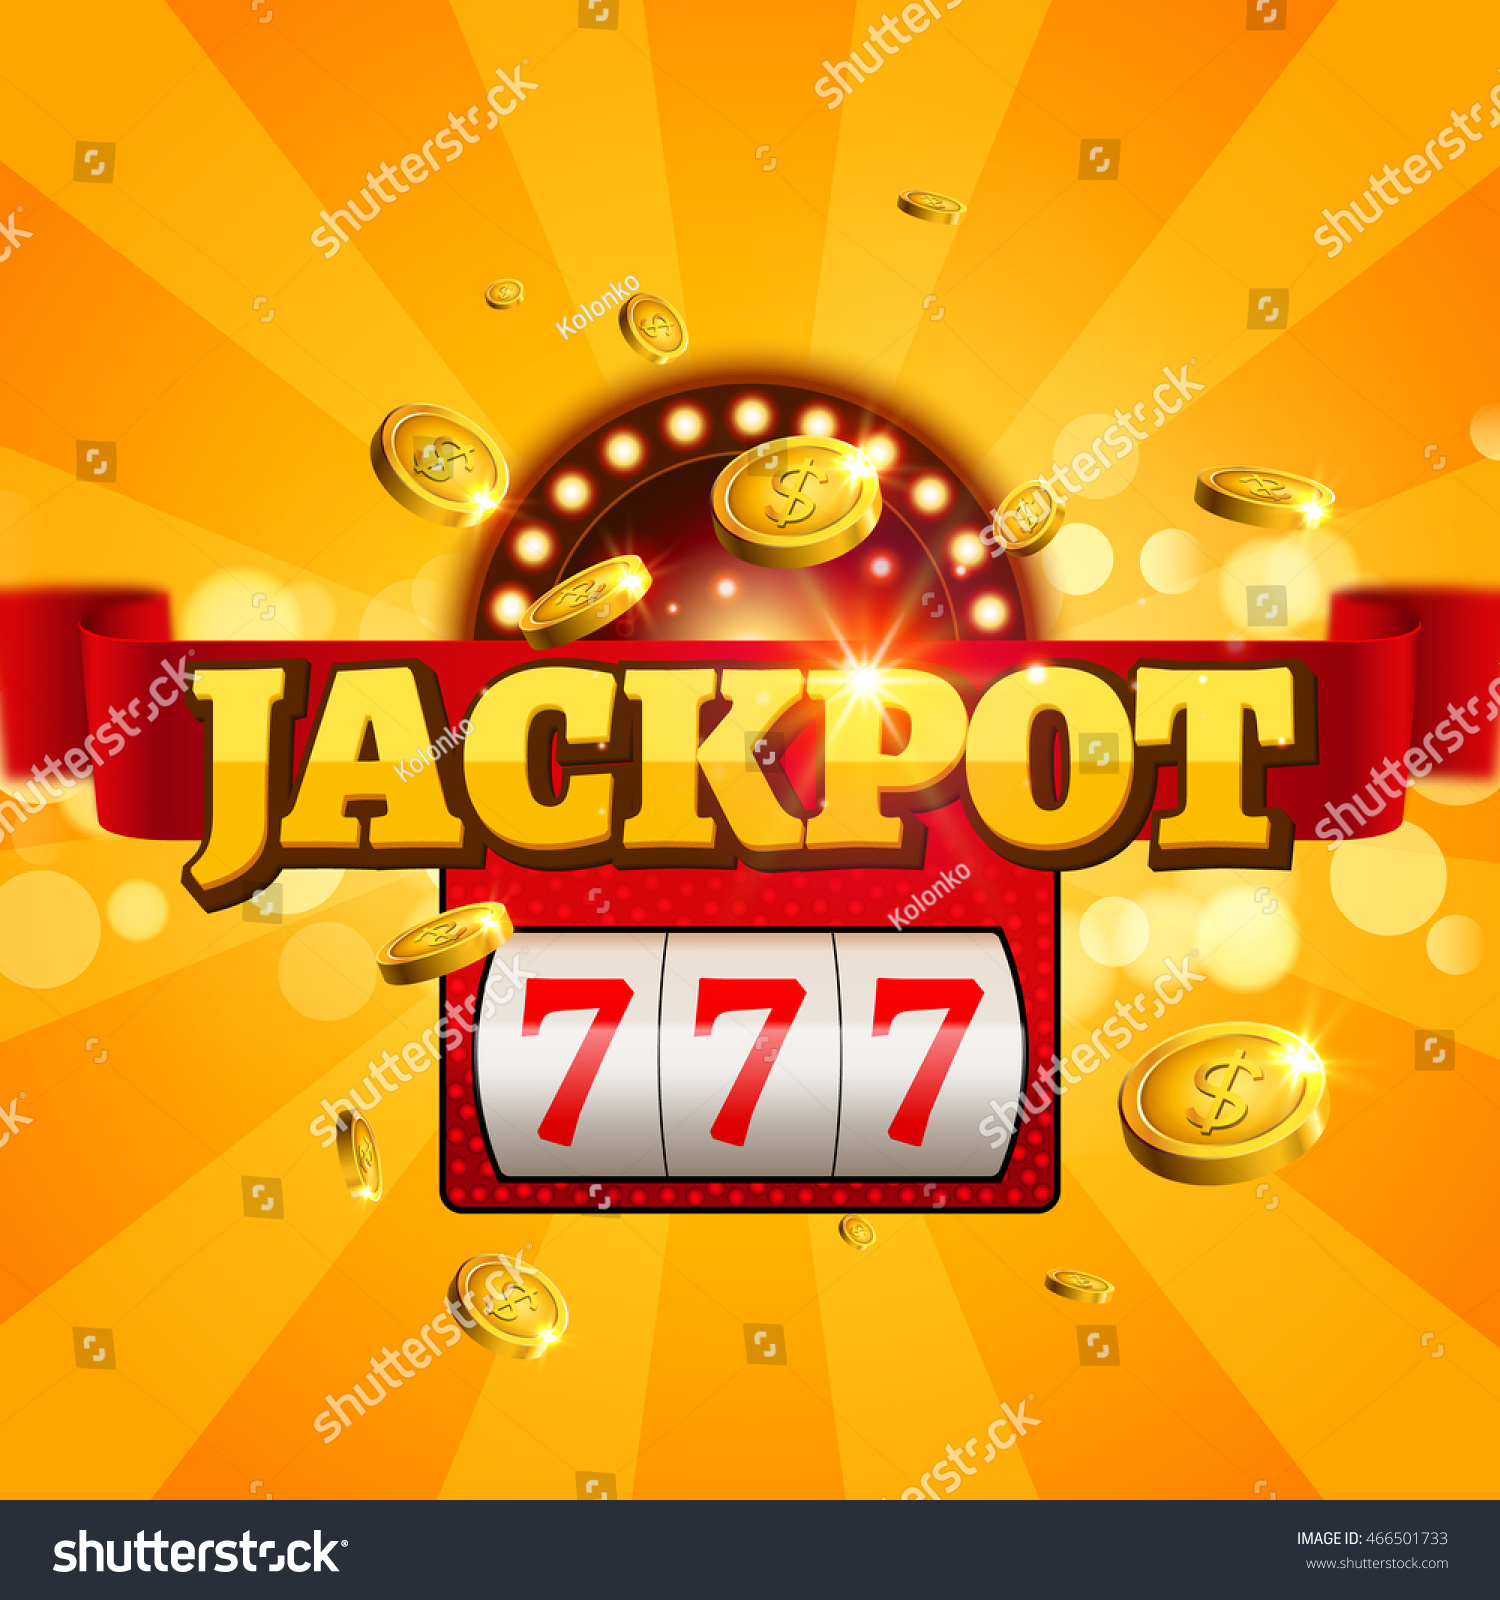 Jackpot 777 Gambling Poster Design Money Stock Vector 466501733 - Shutterstock